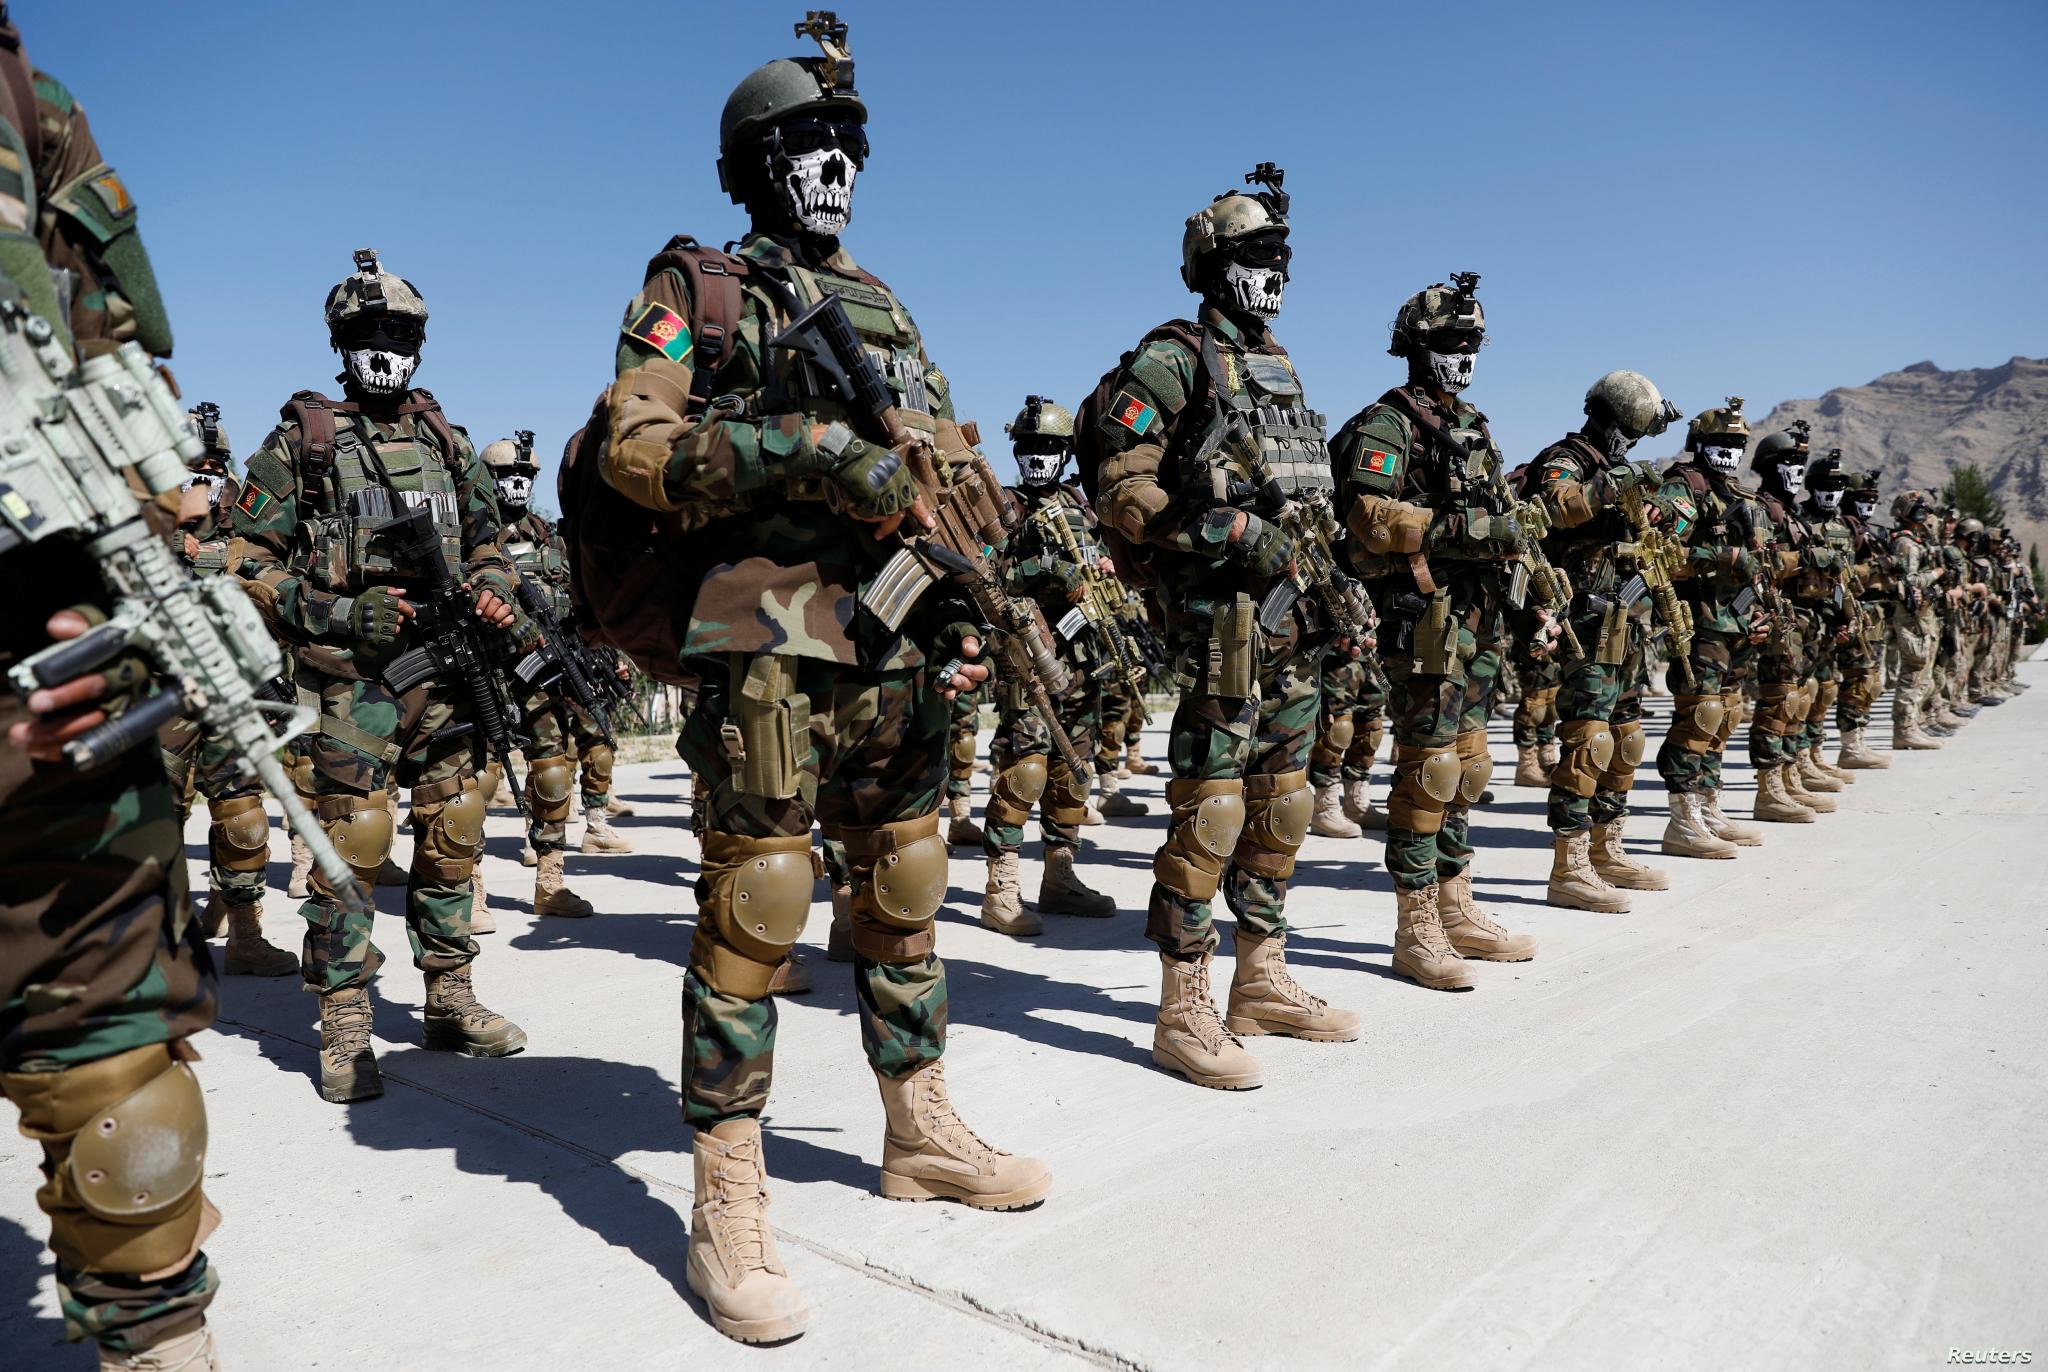 U.S. leaves its last Afghan base, effectively ending operations-2020-06-17t000000z_1071569338_rc2xah9zvgii_rtrmadp_3_afghanistan-military-jpg